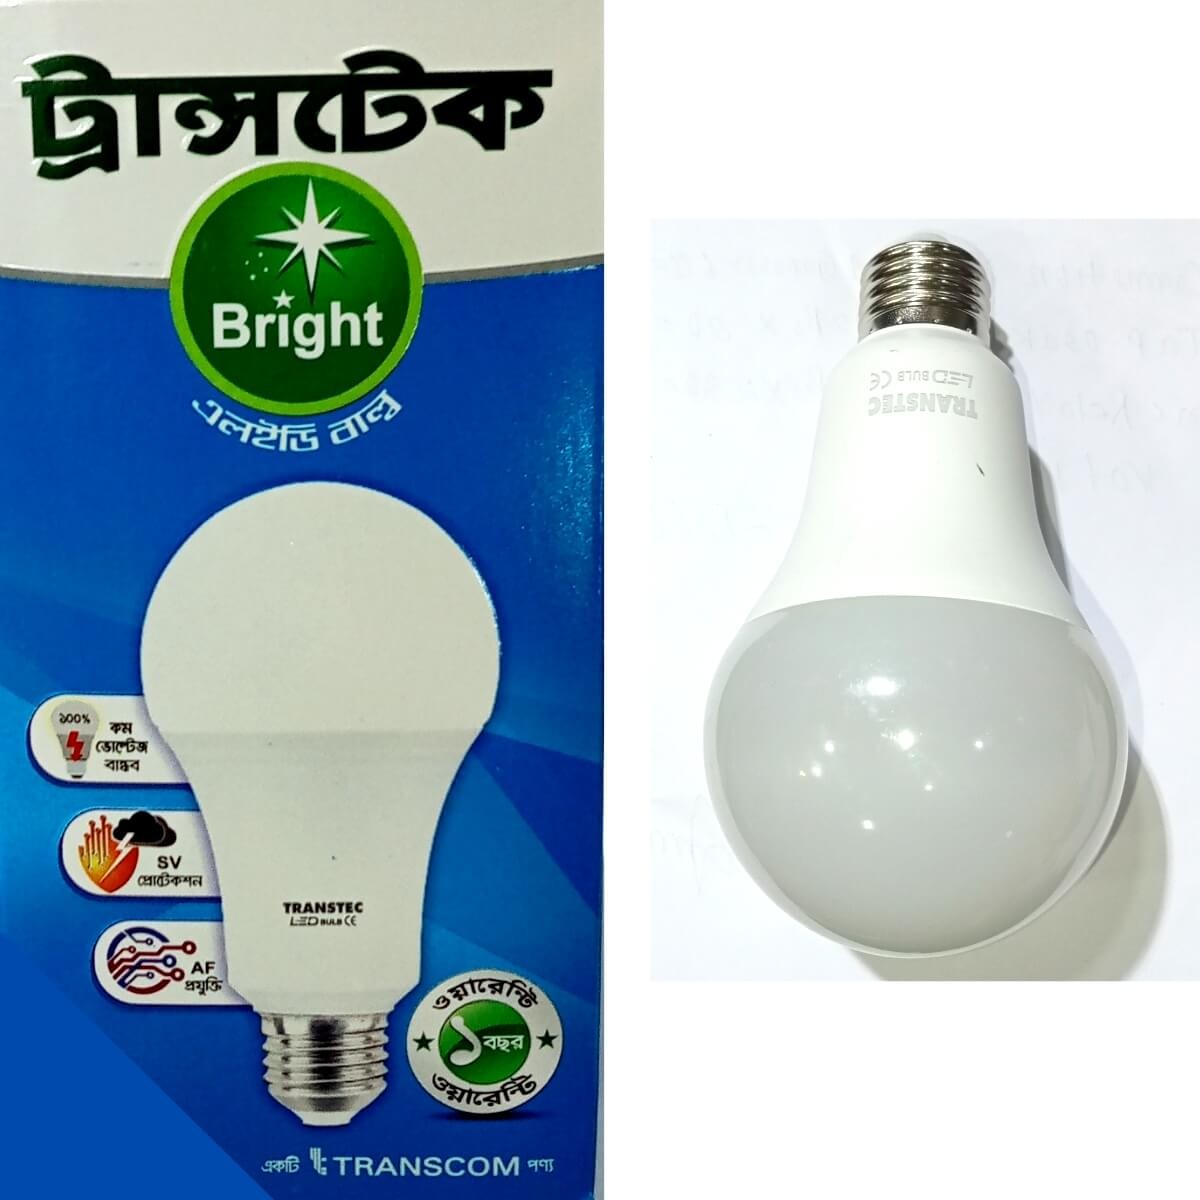 Transtec Bright 13Watt LED Bulb প্যাচ টাইপ... BD